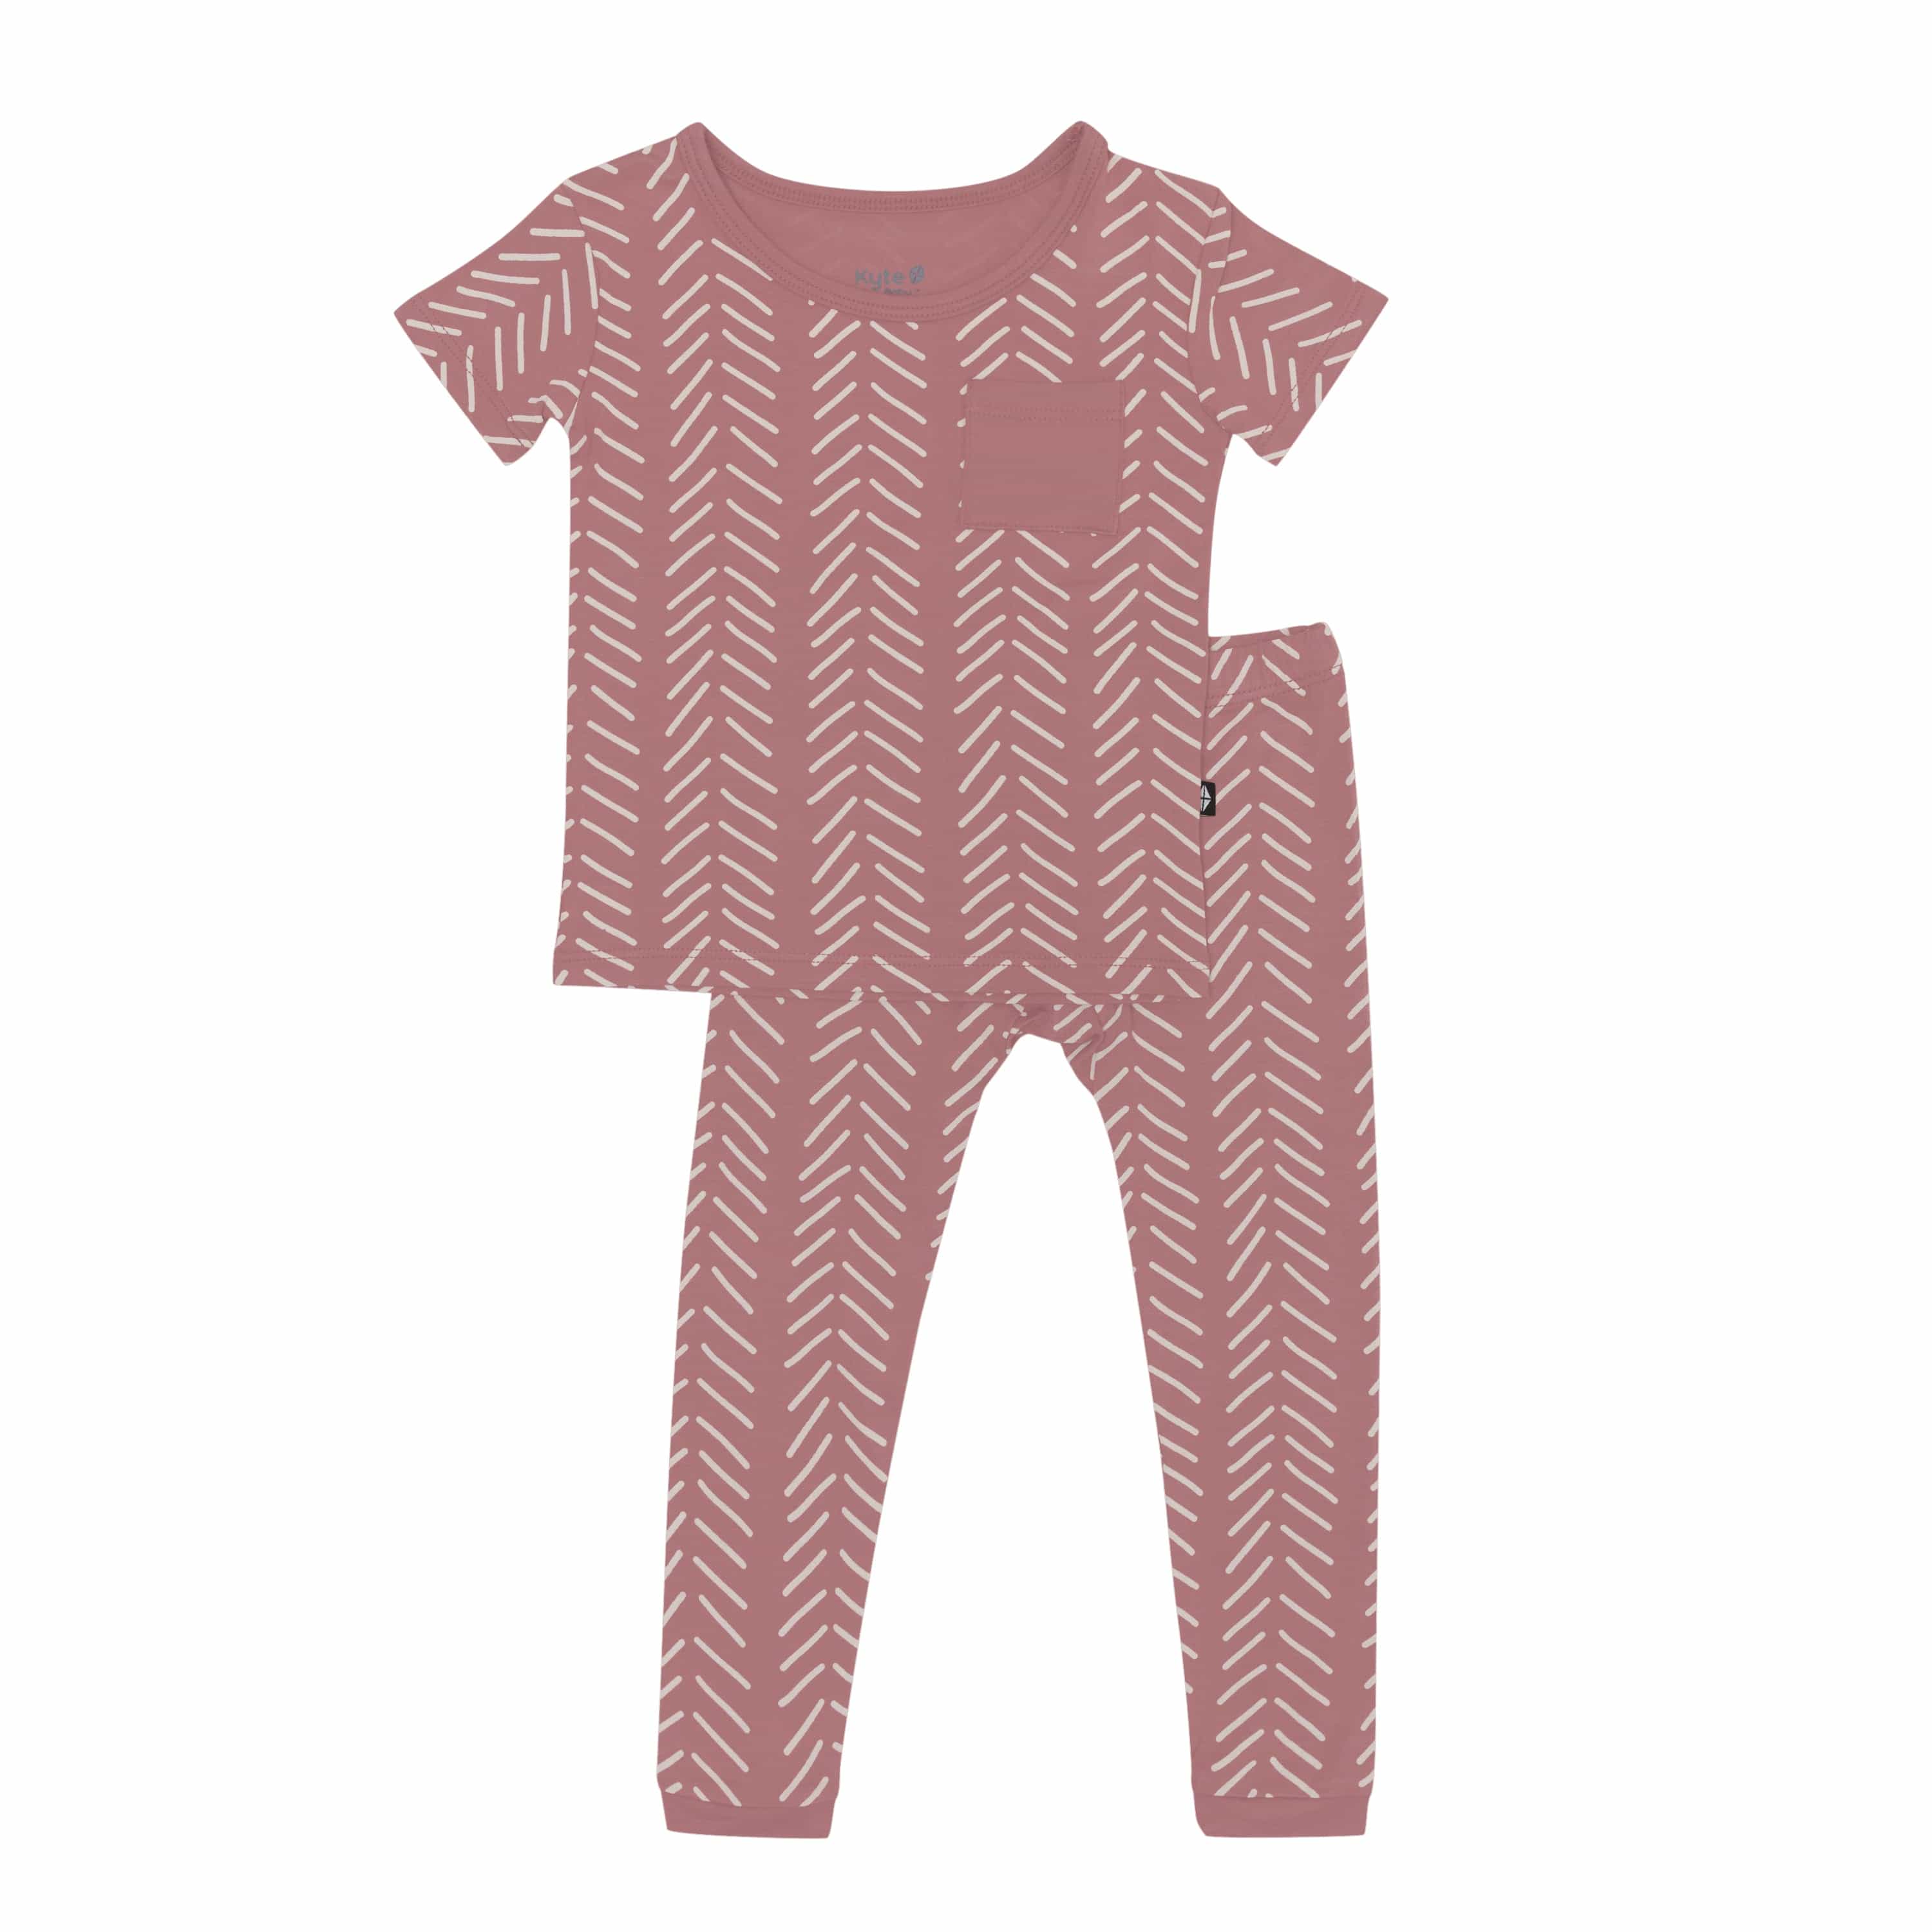 Kyte Baby Short Sleeve with Pants Pajama Short Sleeve with Pants Pajamas in Dusty Rose Herringbone